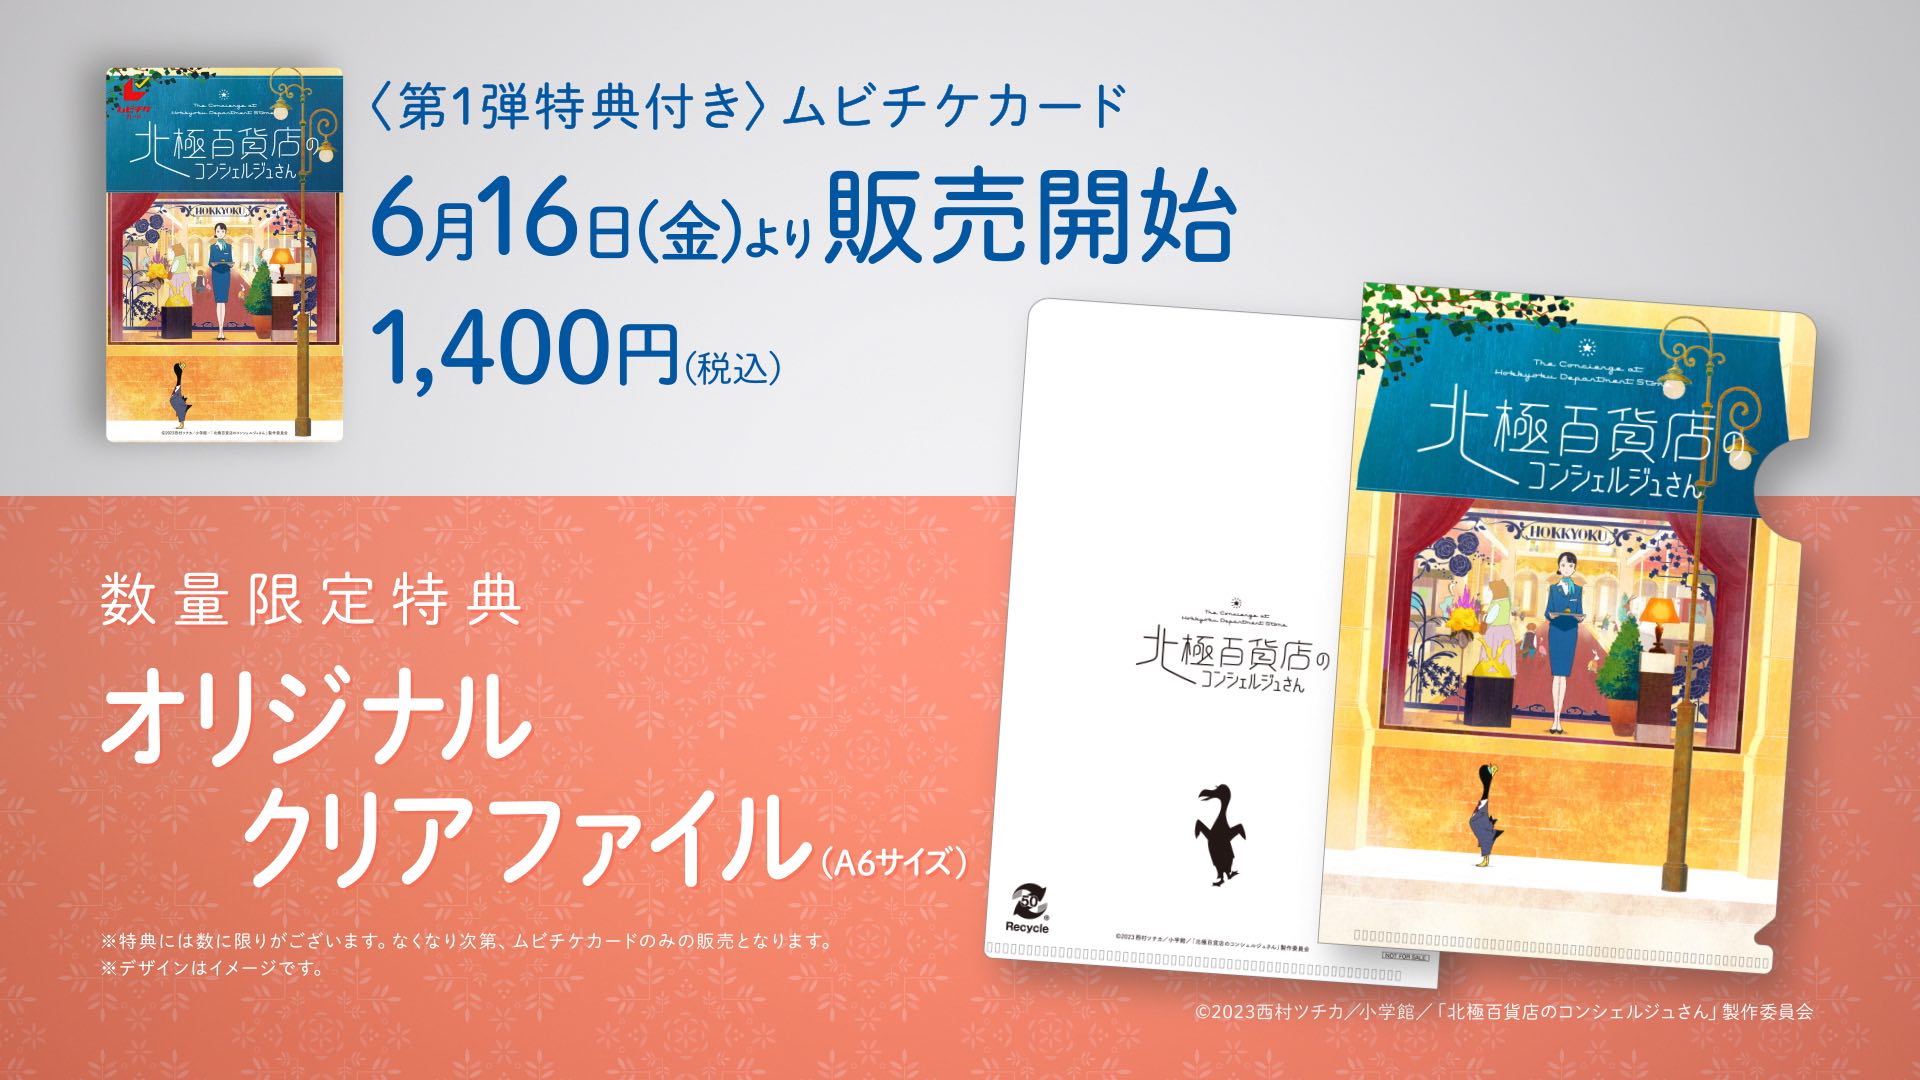 The Concierge at Hokkyoku Department Store Film Pre-Sale Bonus